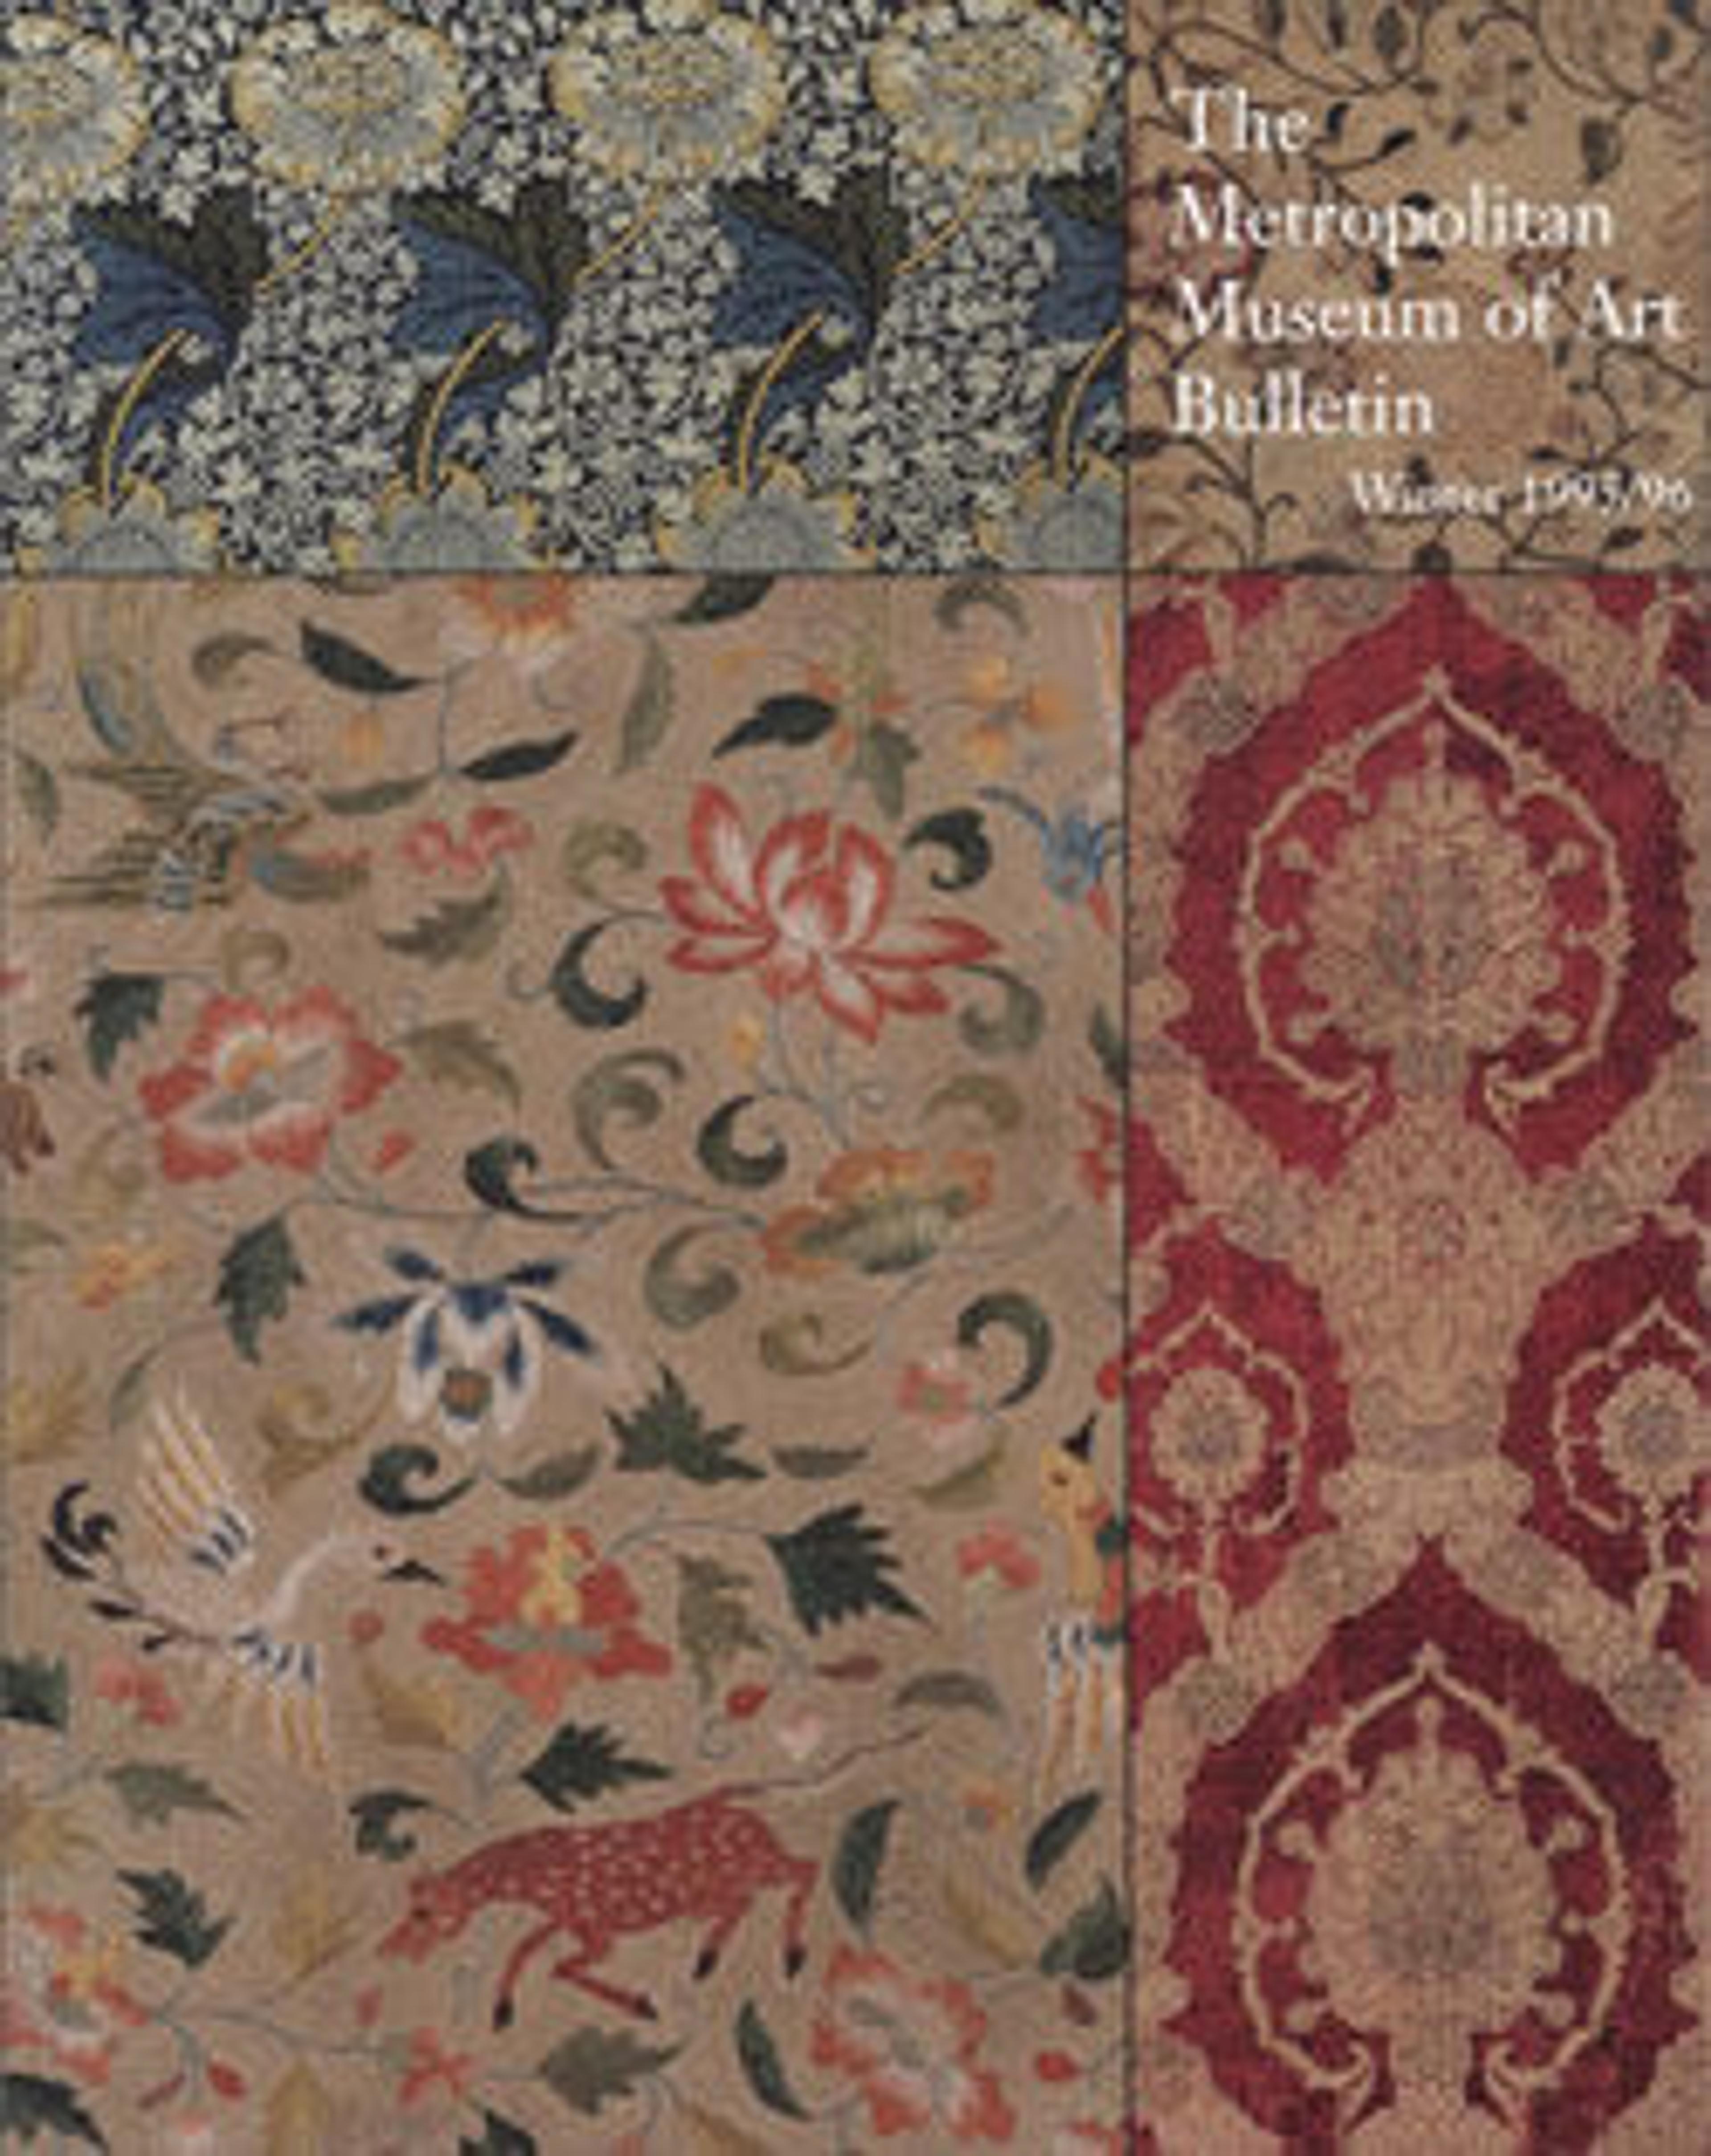 "Textiles in The Metropolitan Museum of Art": The Metropolitan Museum of Art Bulletin, v. 53, no. 3 (Winter, 1995-1996)